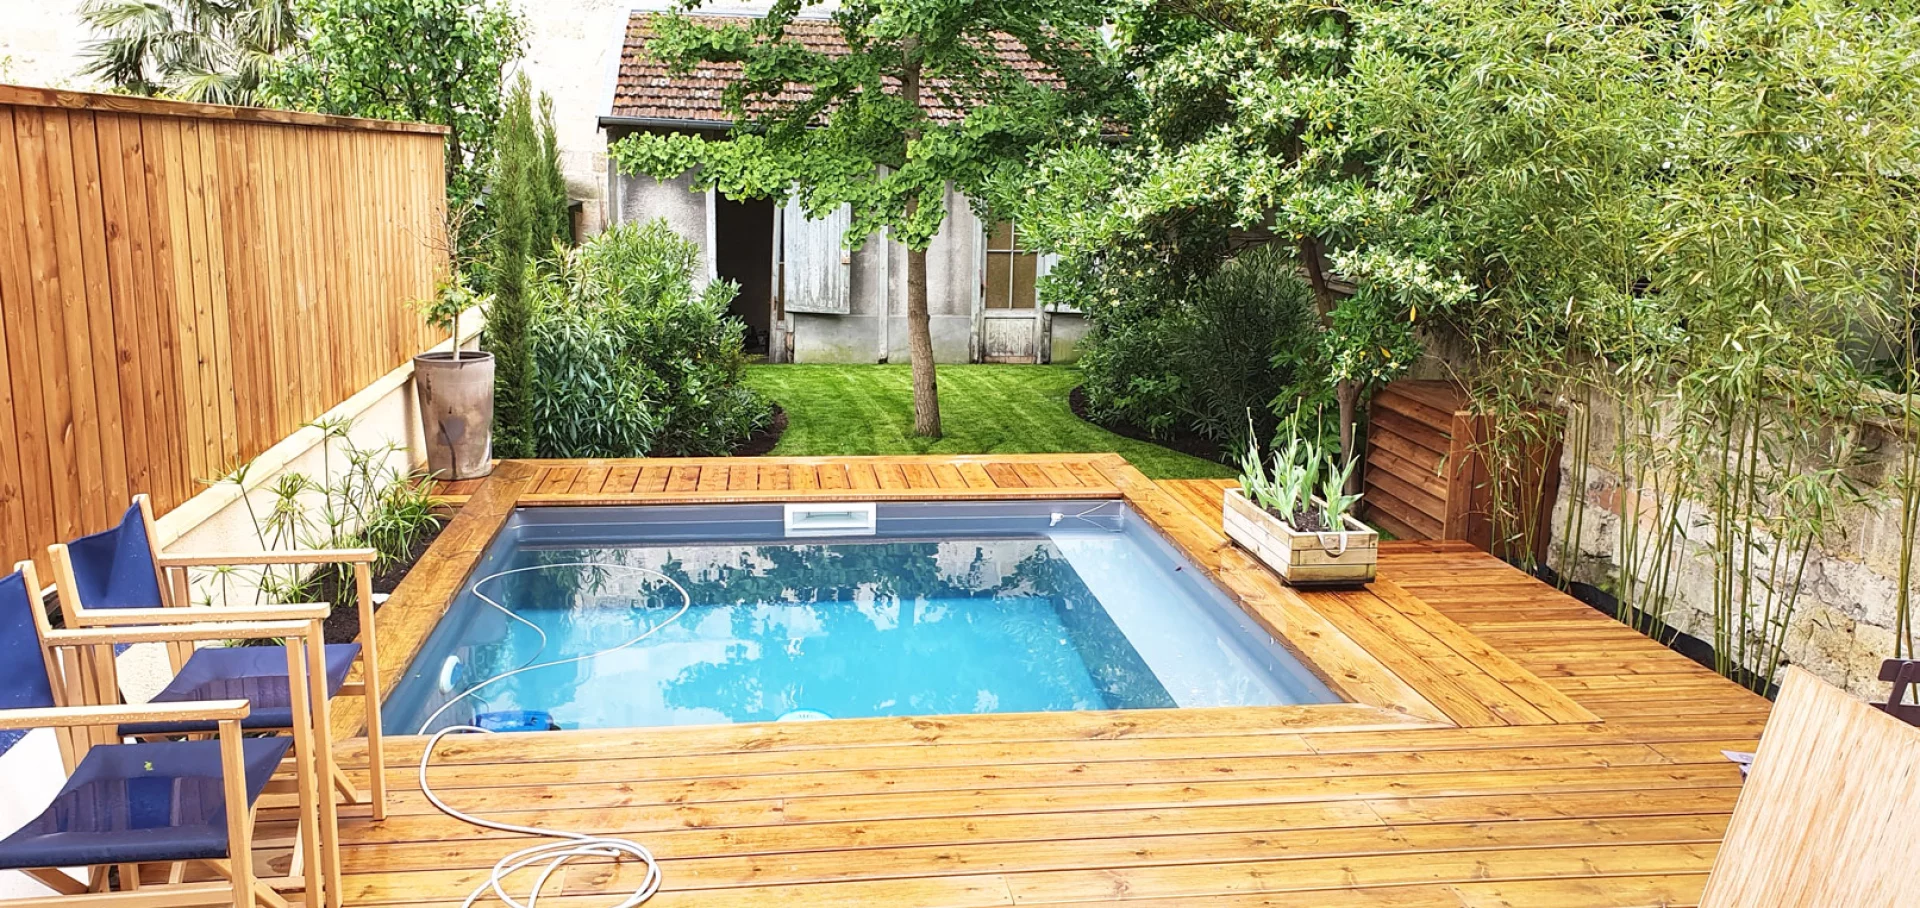 Petit jardin avec piscine terrasse et plantation